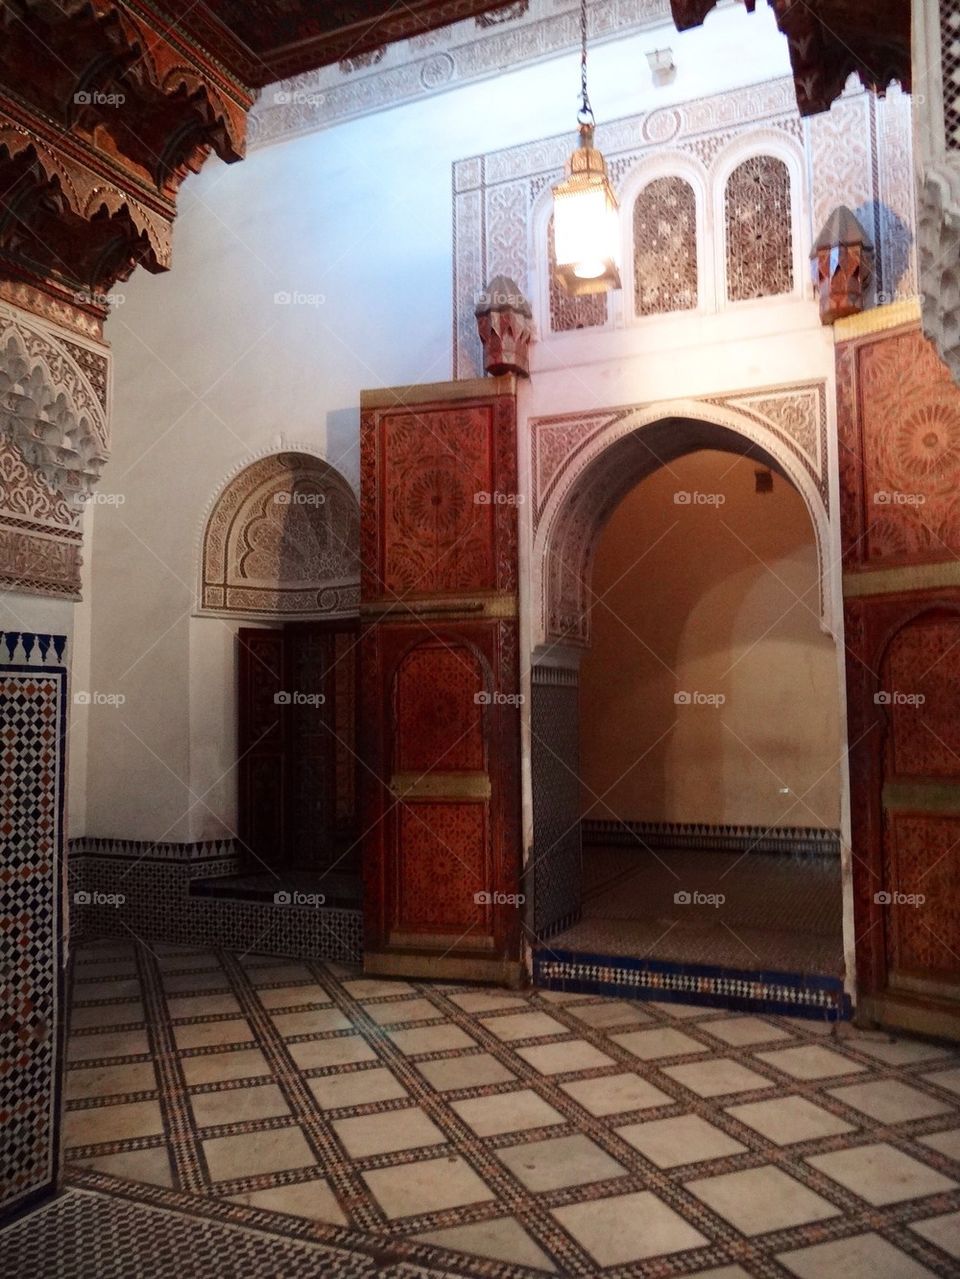 Marrakech history